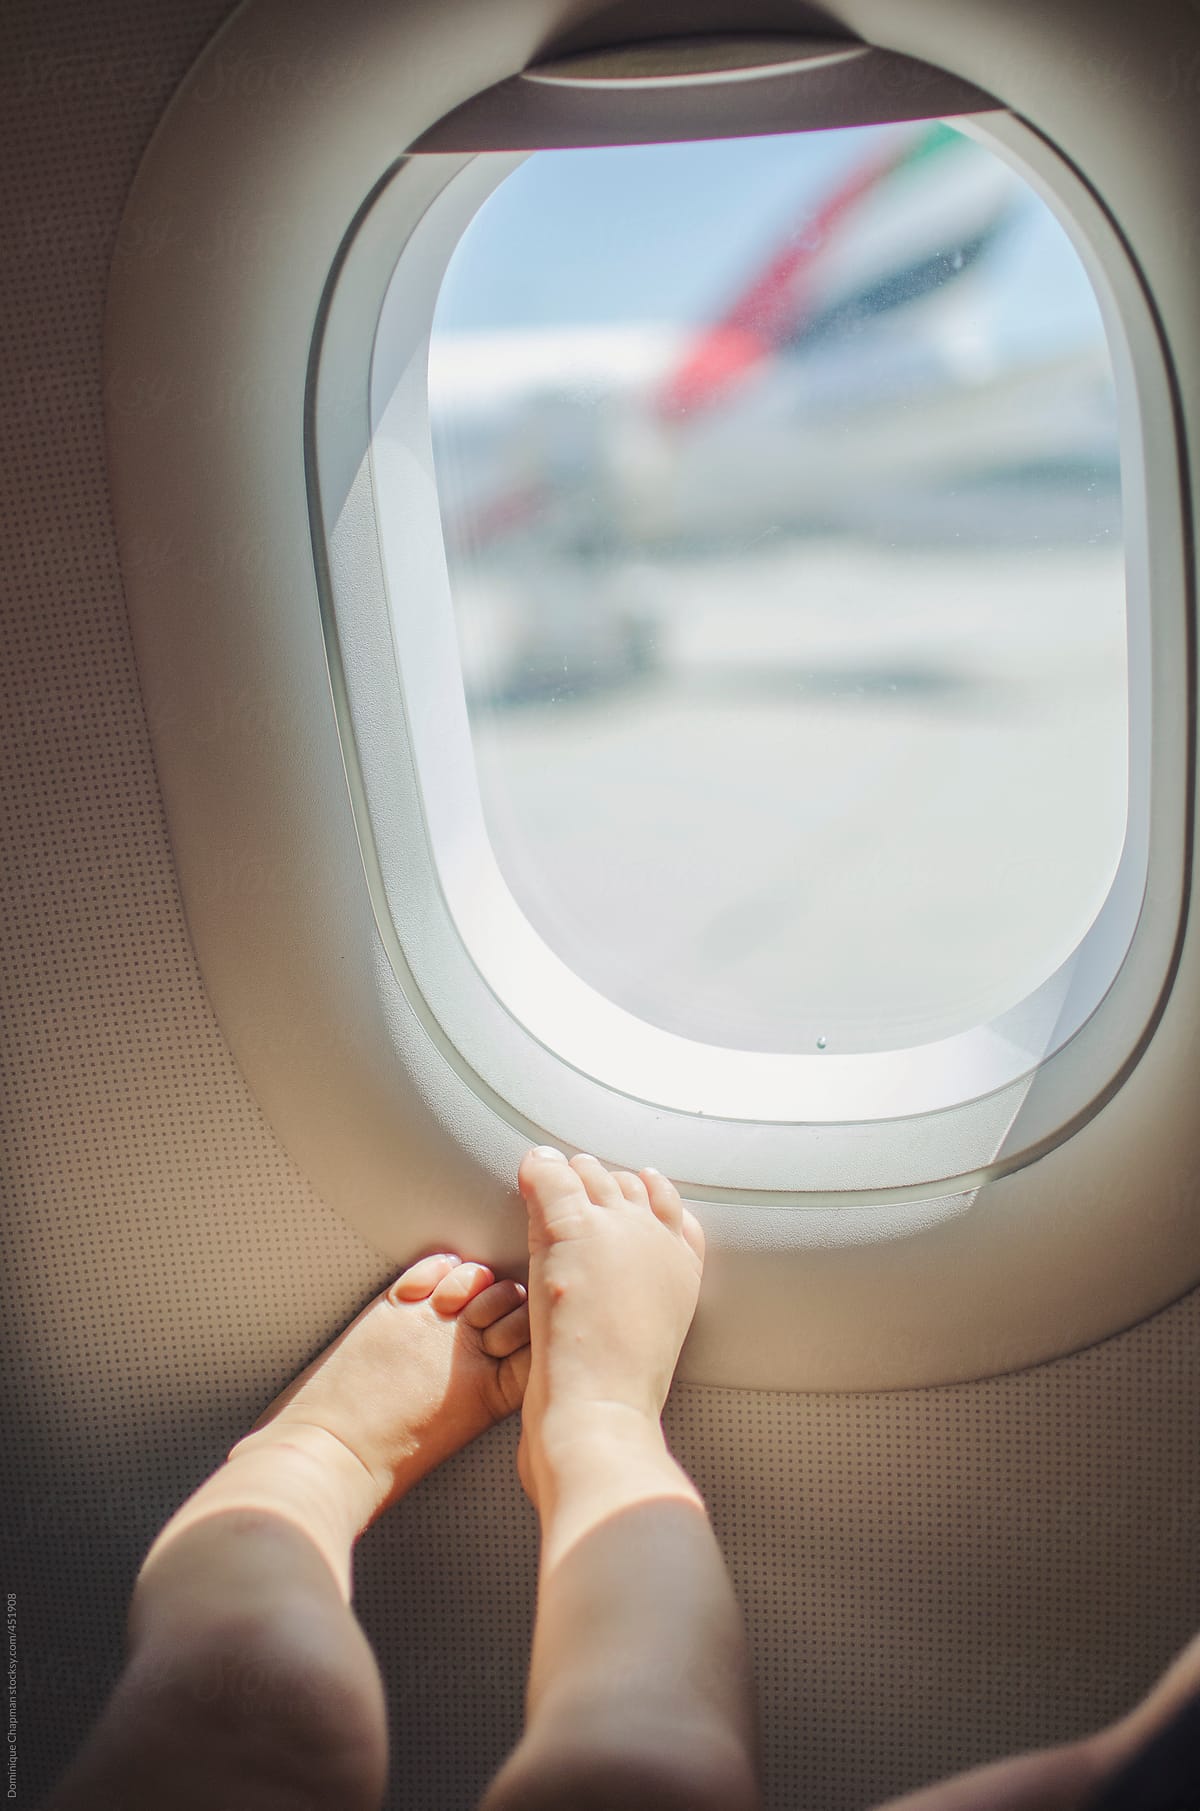 Small childs feet next to plane window